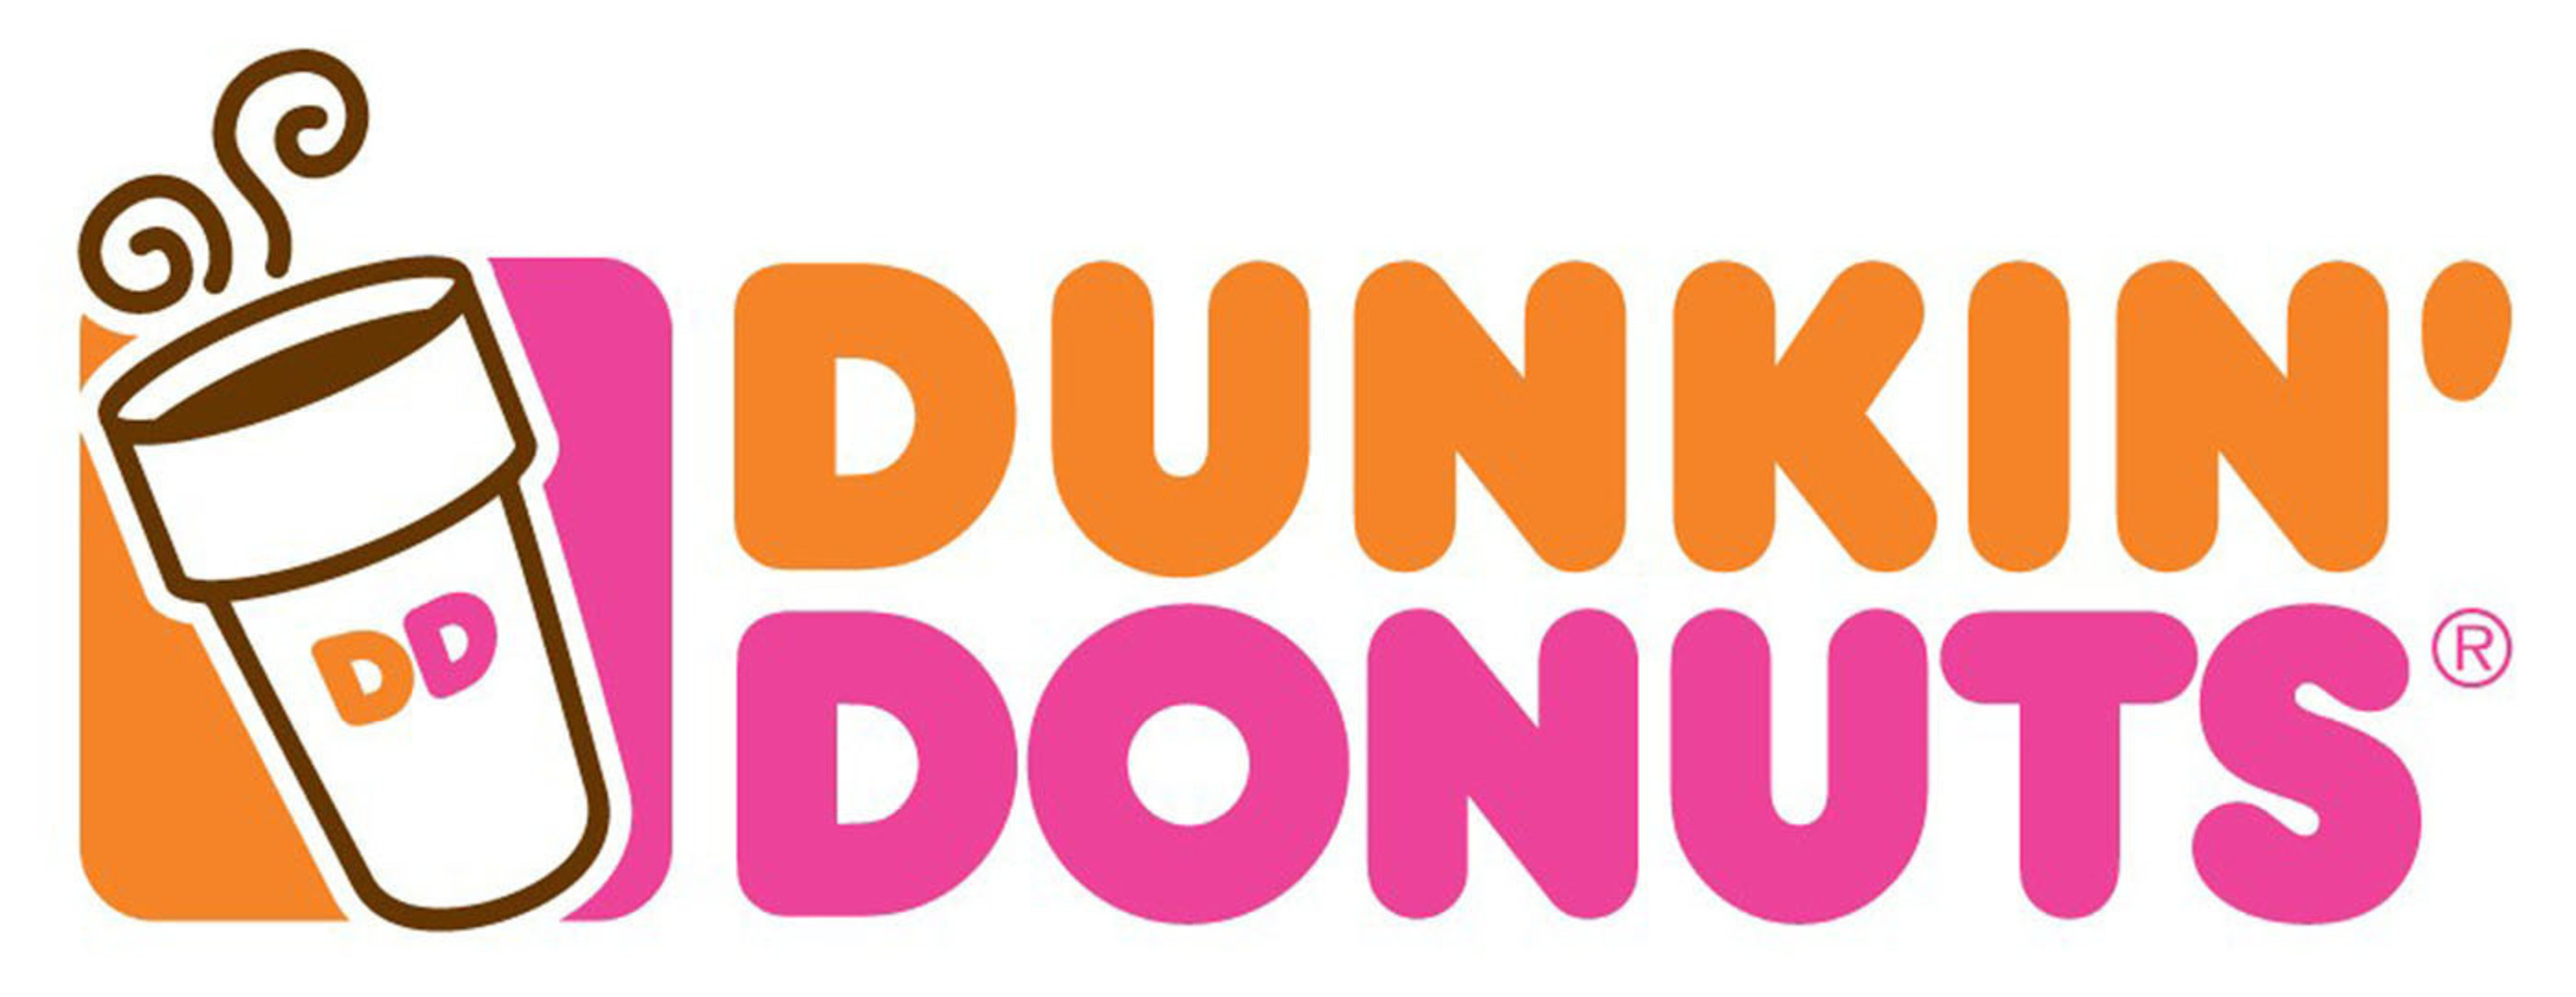 Image result for dunkin donuts logo